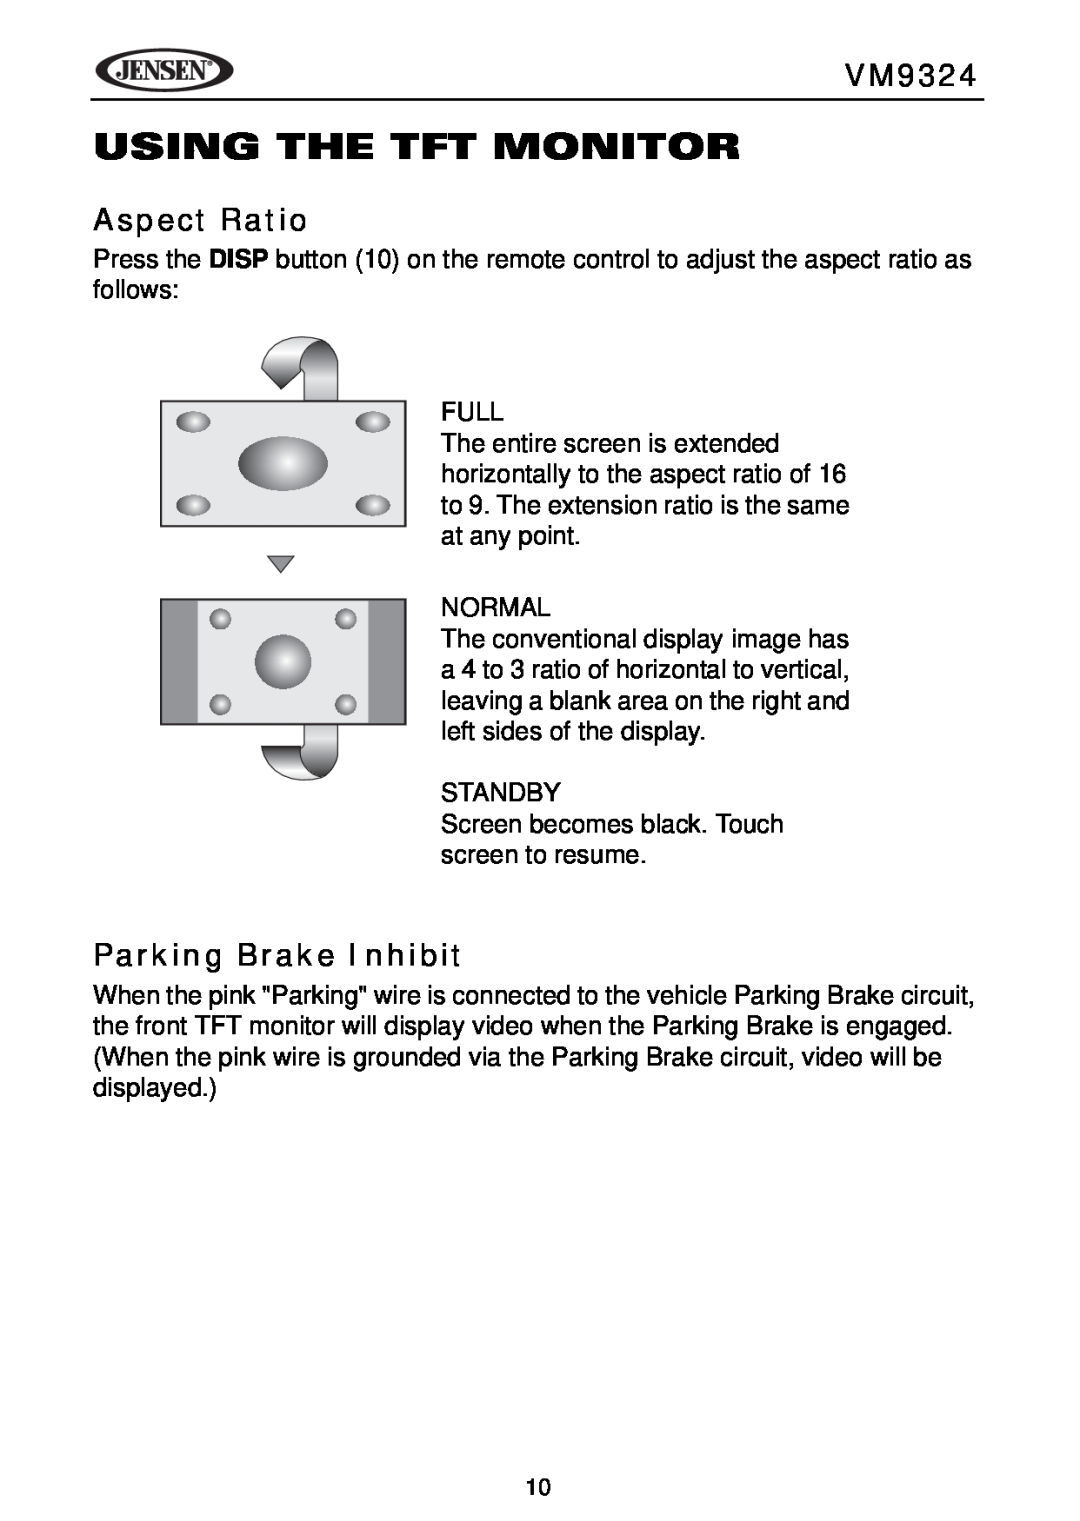 Jensen VM9324 manual Using The Tft Monitor, Aspect Ratio, Parking Brake Inhibit 